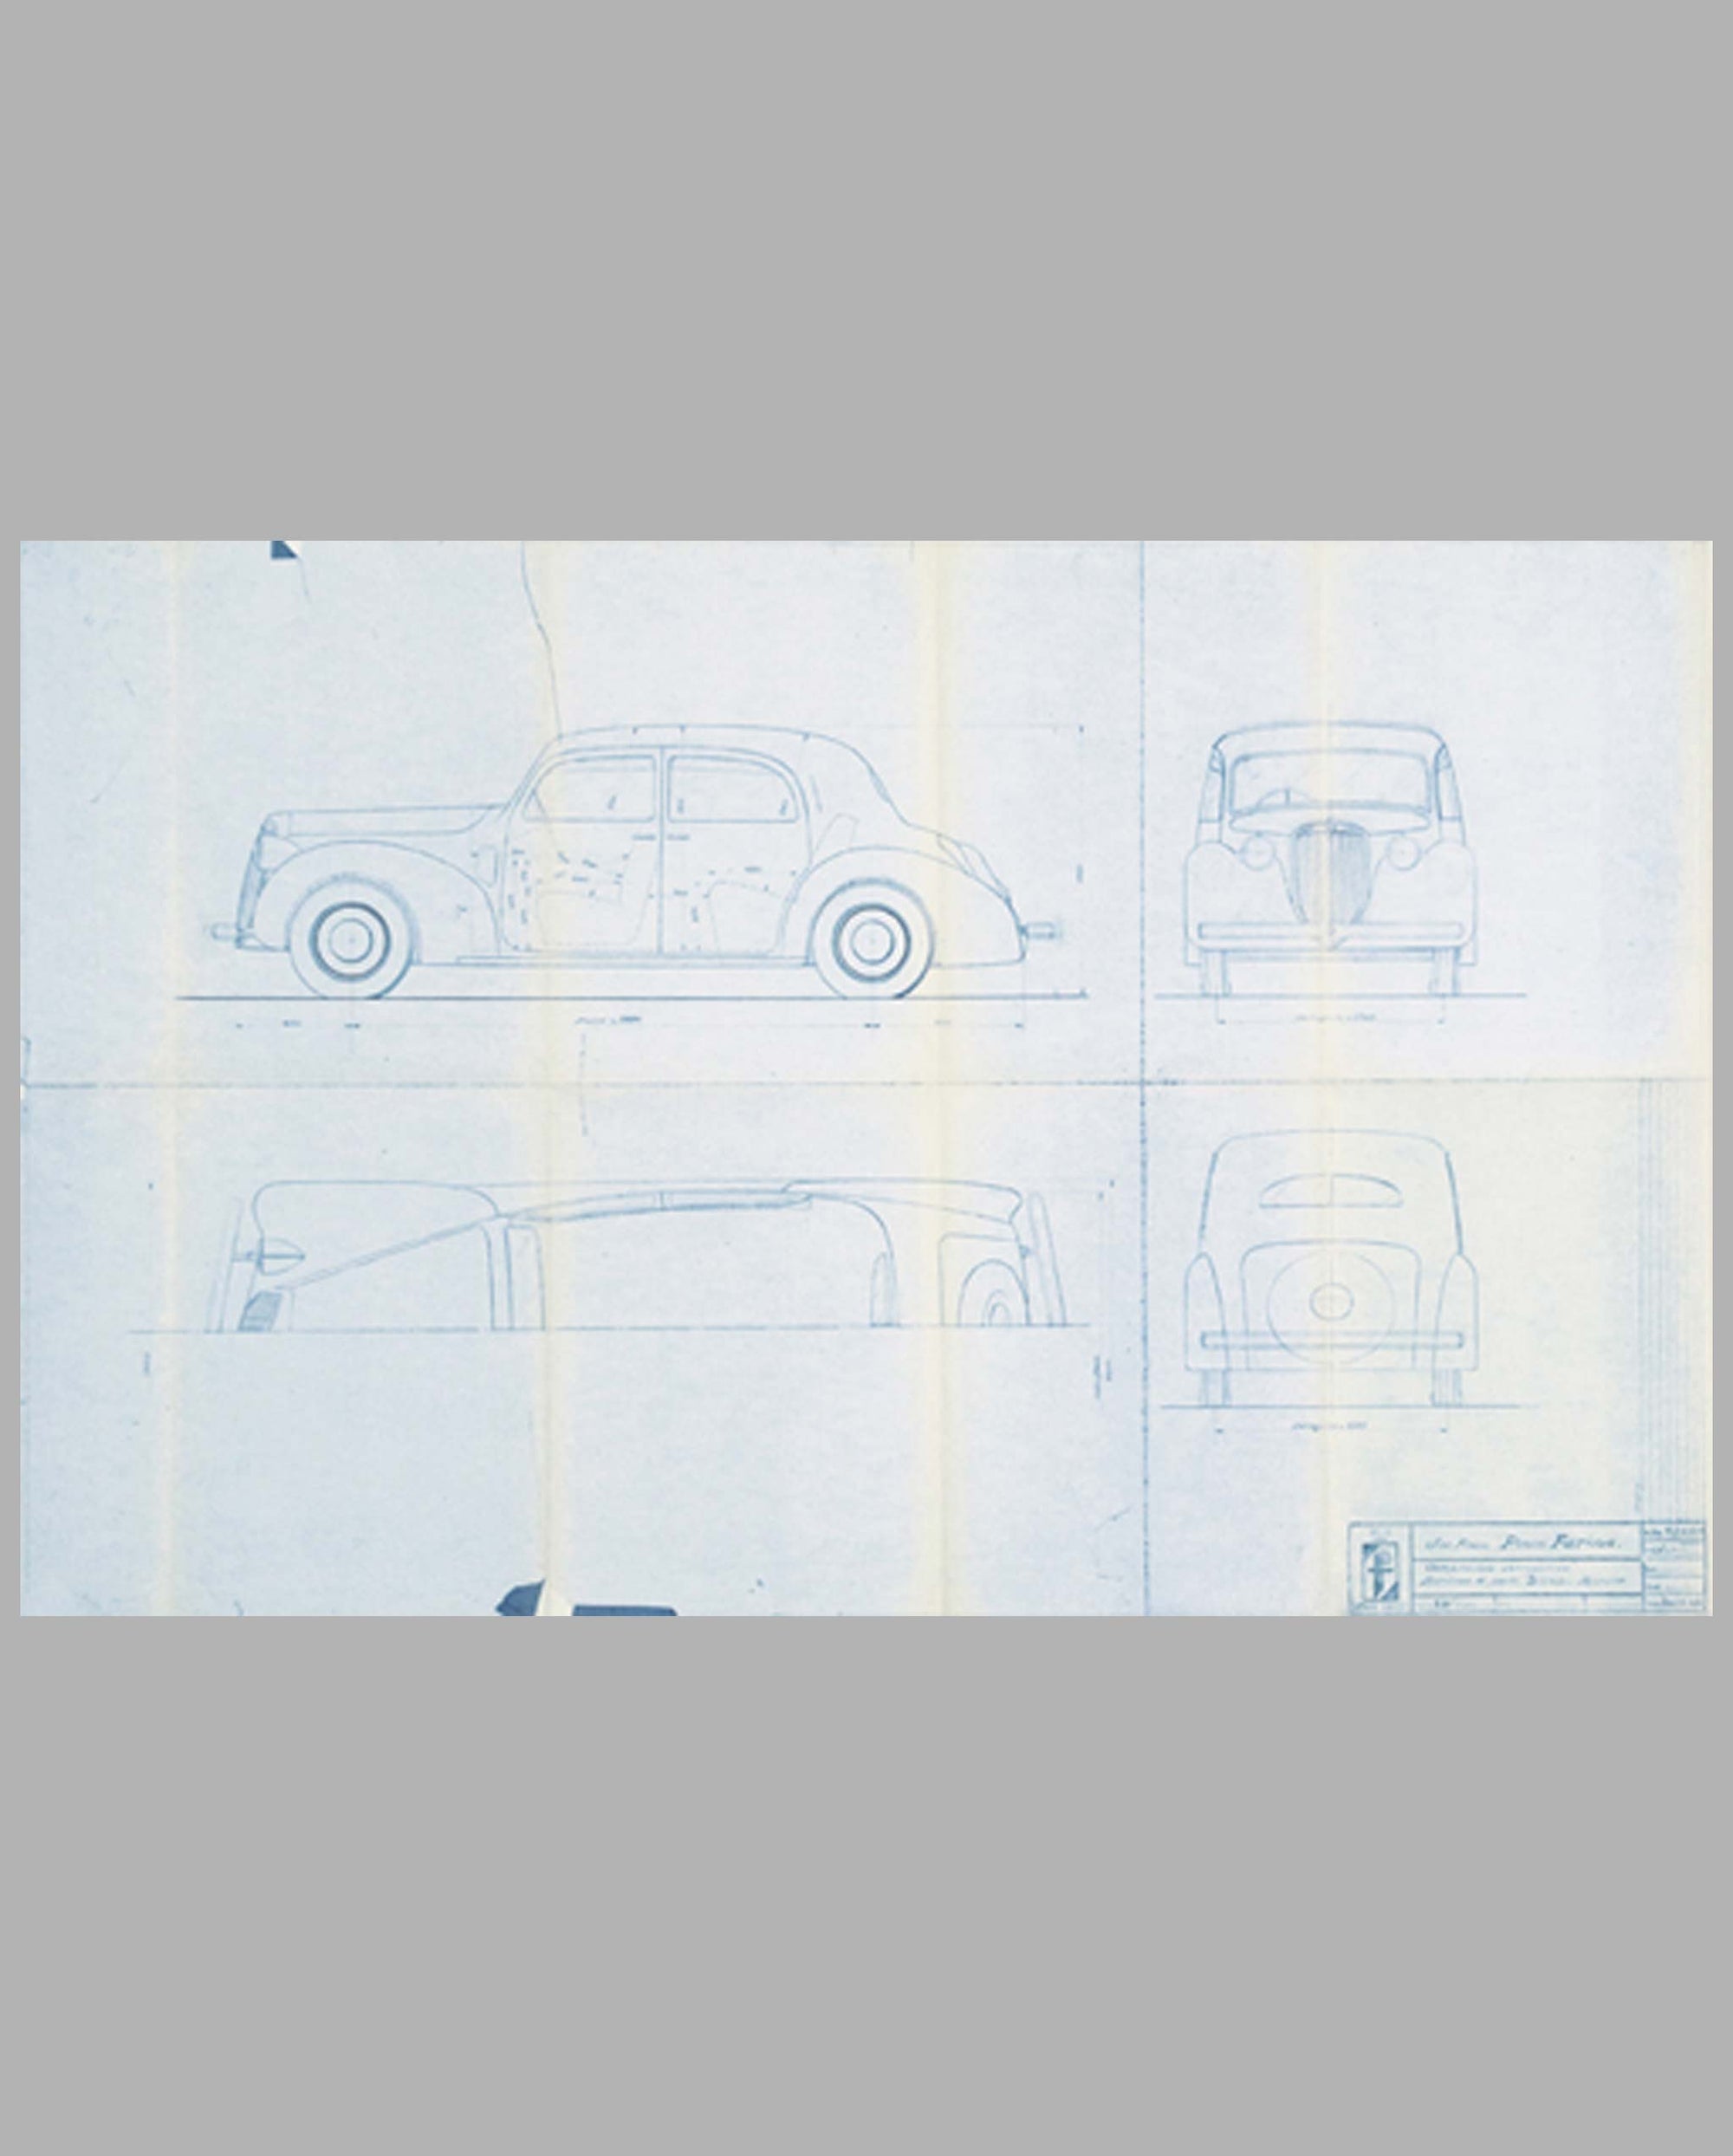 Lancia Berlina “Bilus” Aprilia blueprint from Pininfarina studio, late 1945